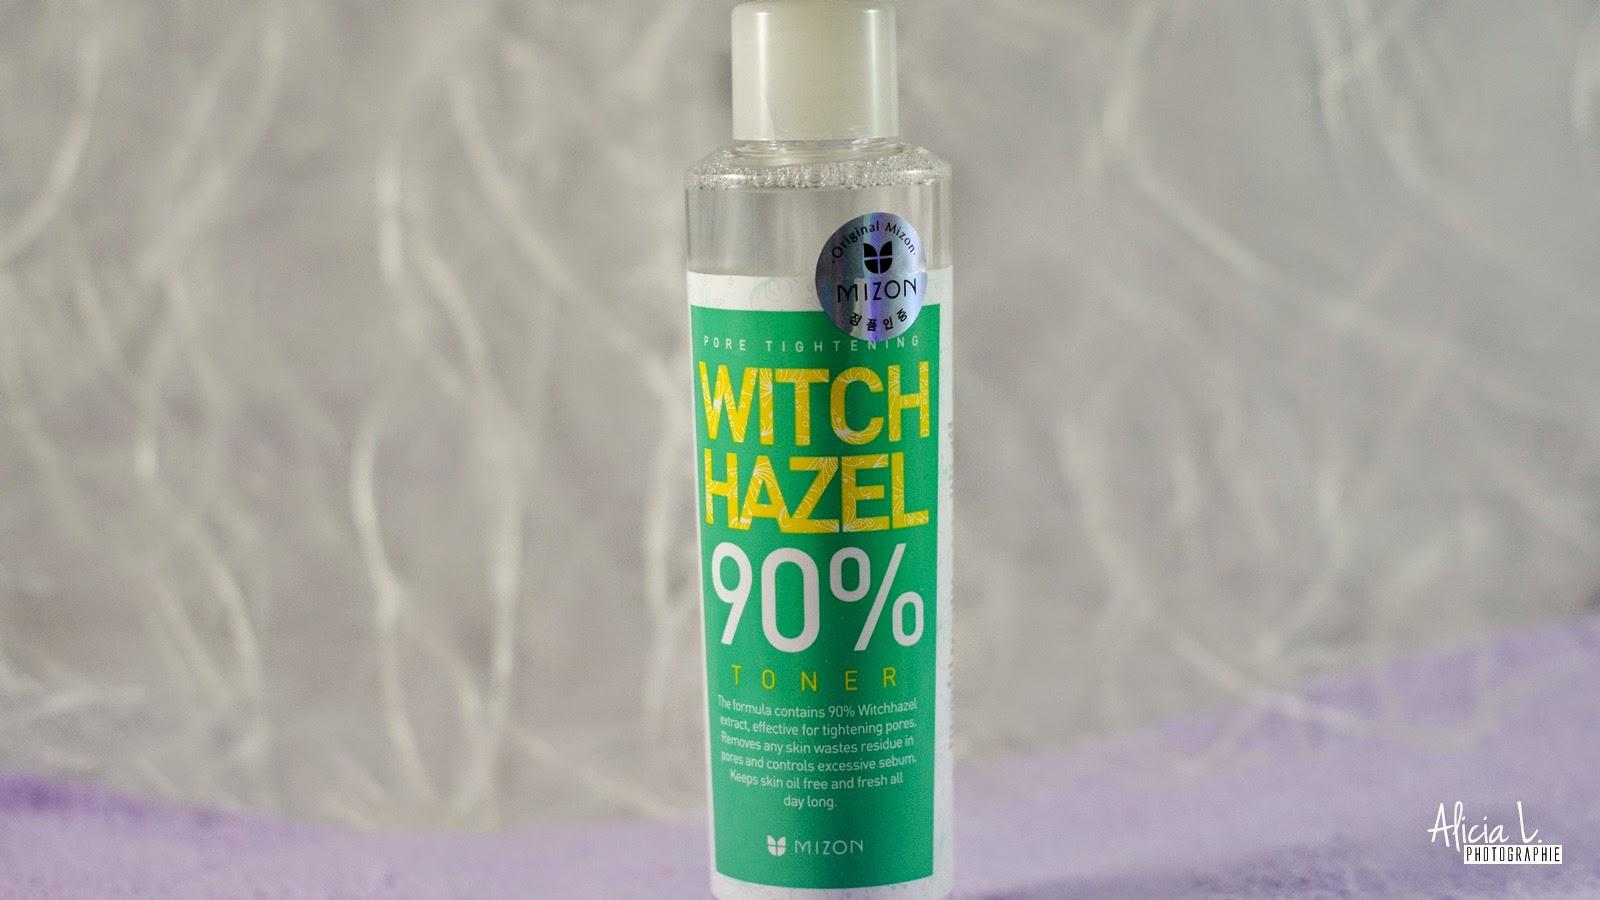 Witch hazel 90% Toner - Mizon